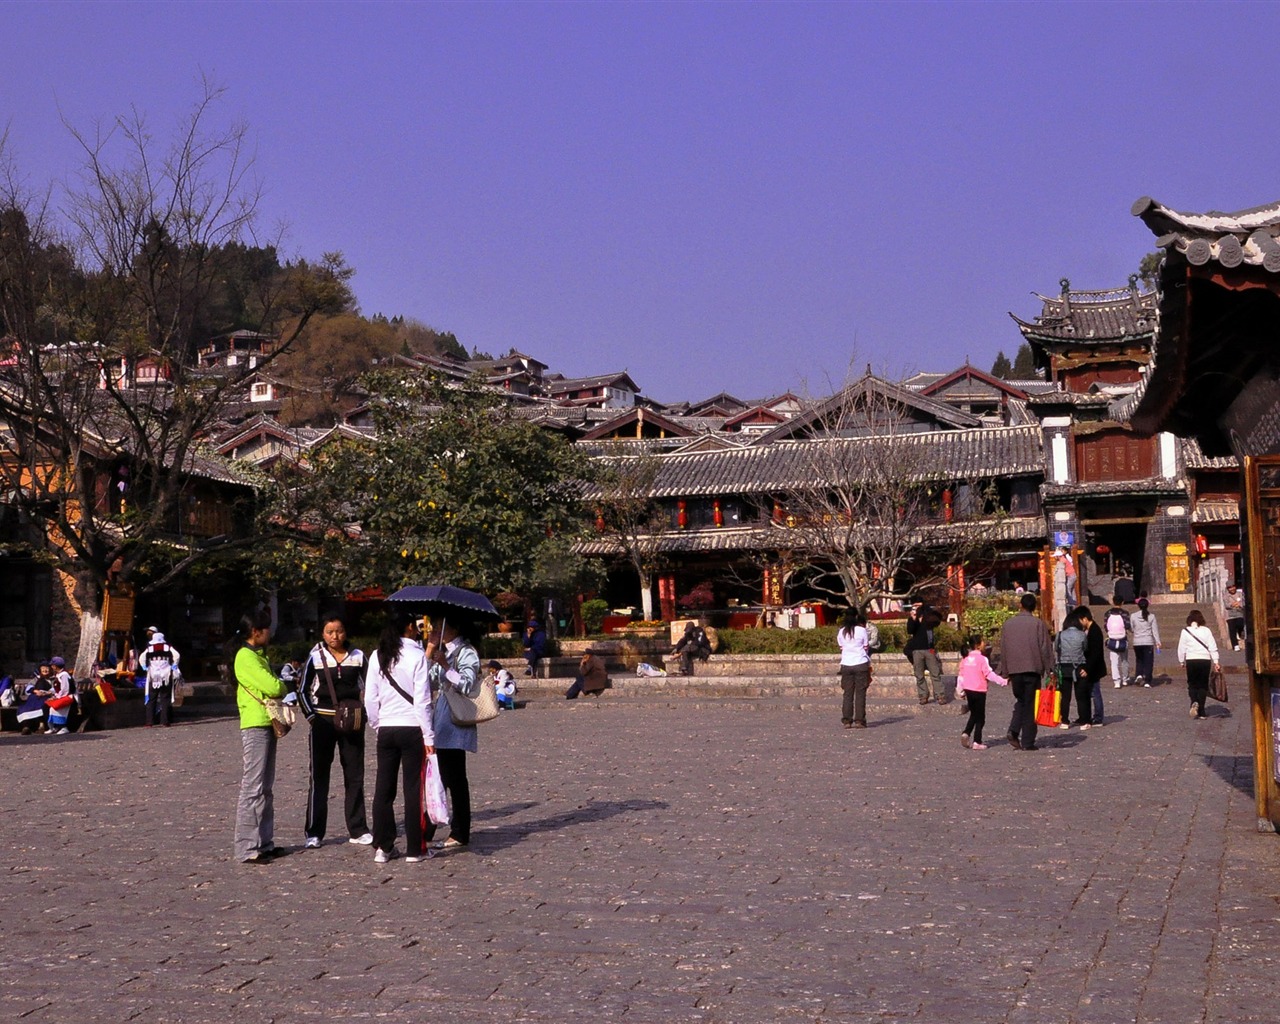 Lijiang ancient town atmosphere (2) (old Hong OK works) #12 - 1280x1024